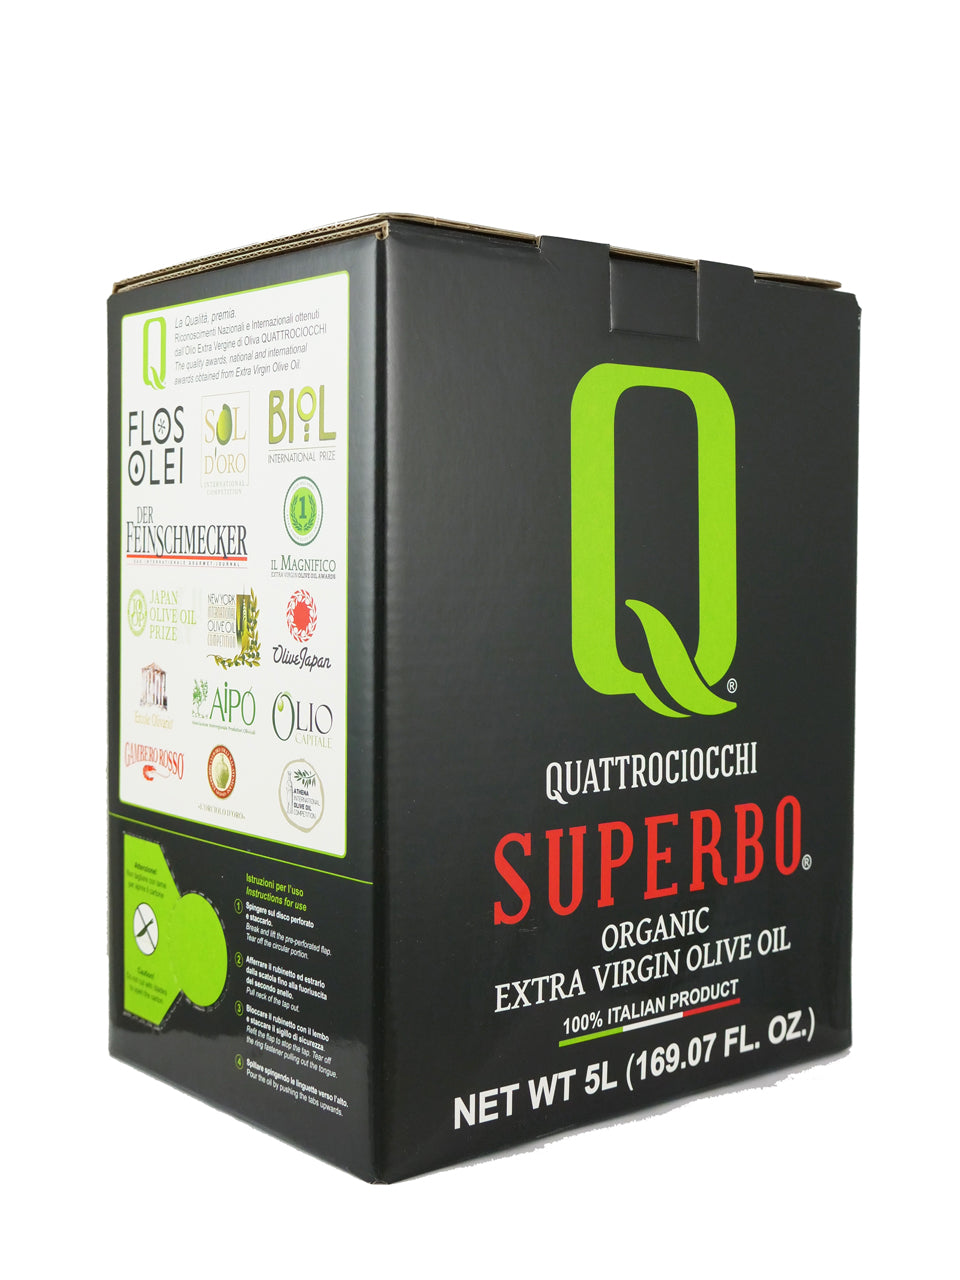 Quattrociocchi Superbo Organic 5L Bag-in-Box 4-Pack